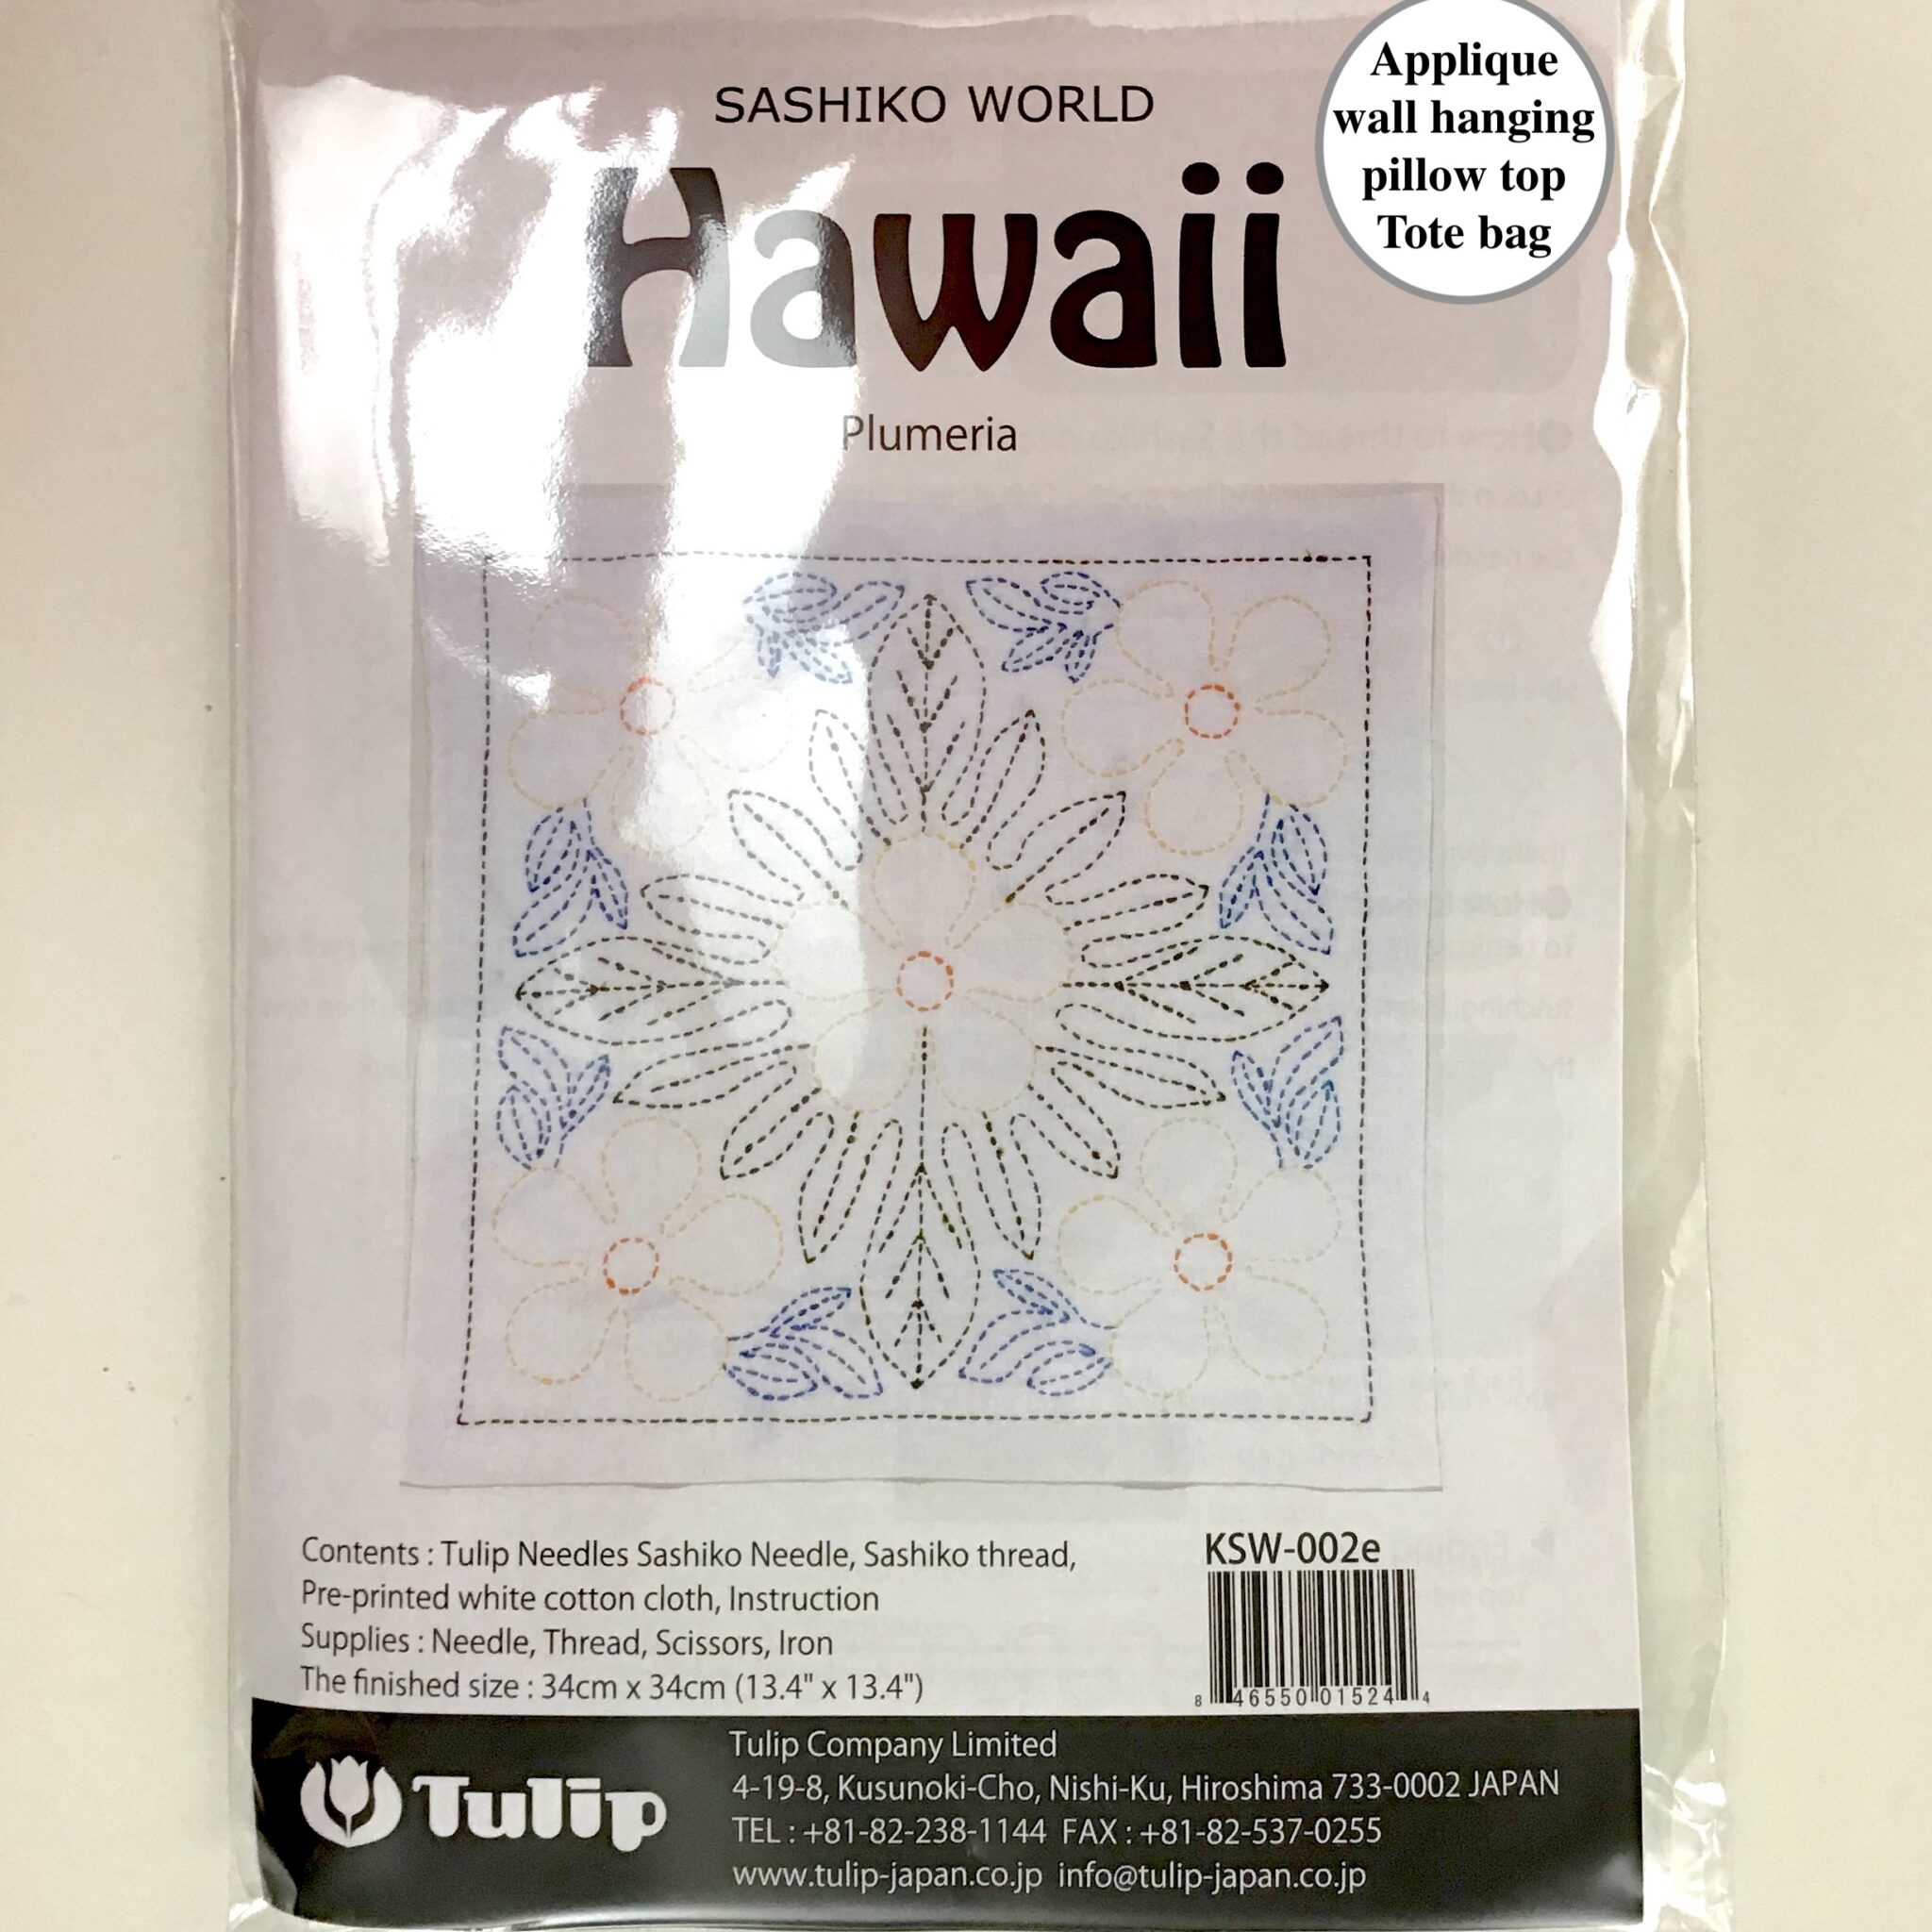 Sashiko kit Hawaii Plumeria - Nimble Needle